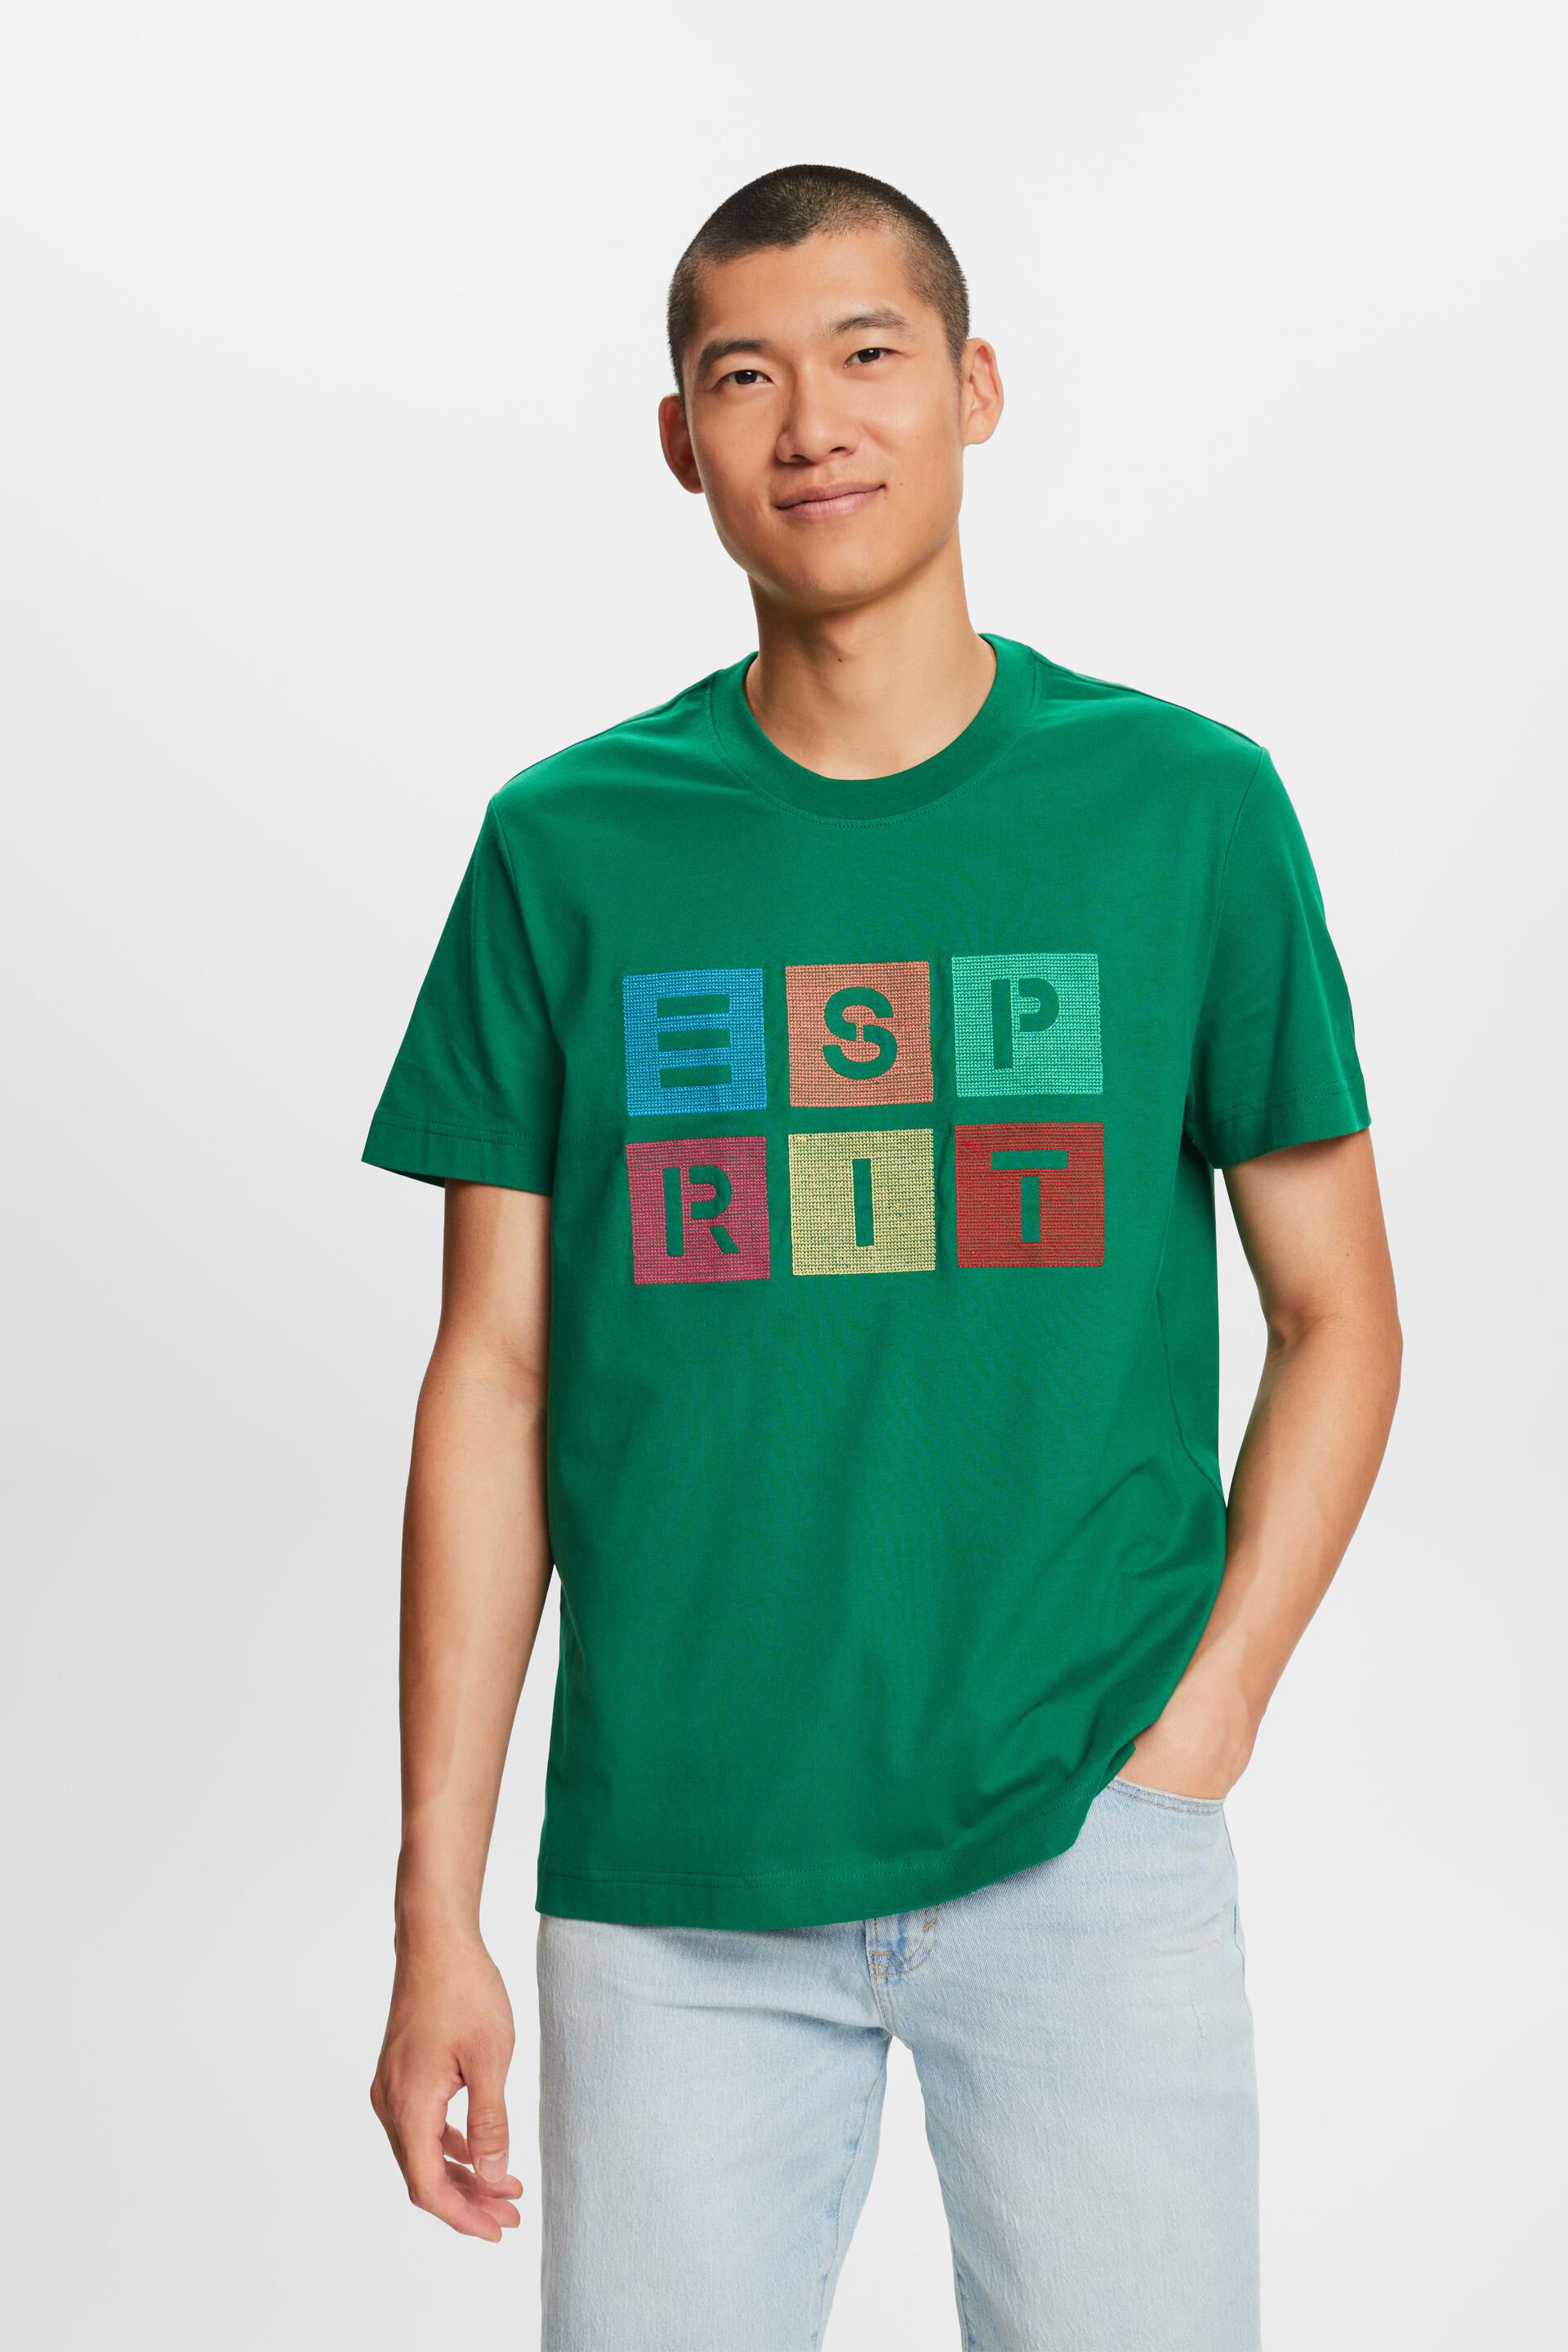 Esprit Bikini Logo t-shirt, 100% cotton